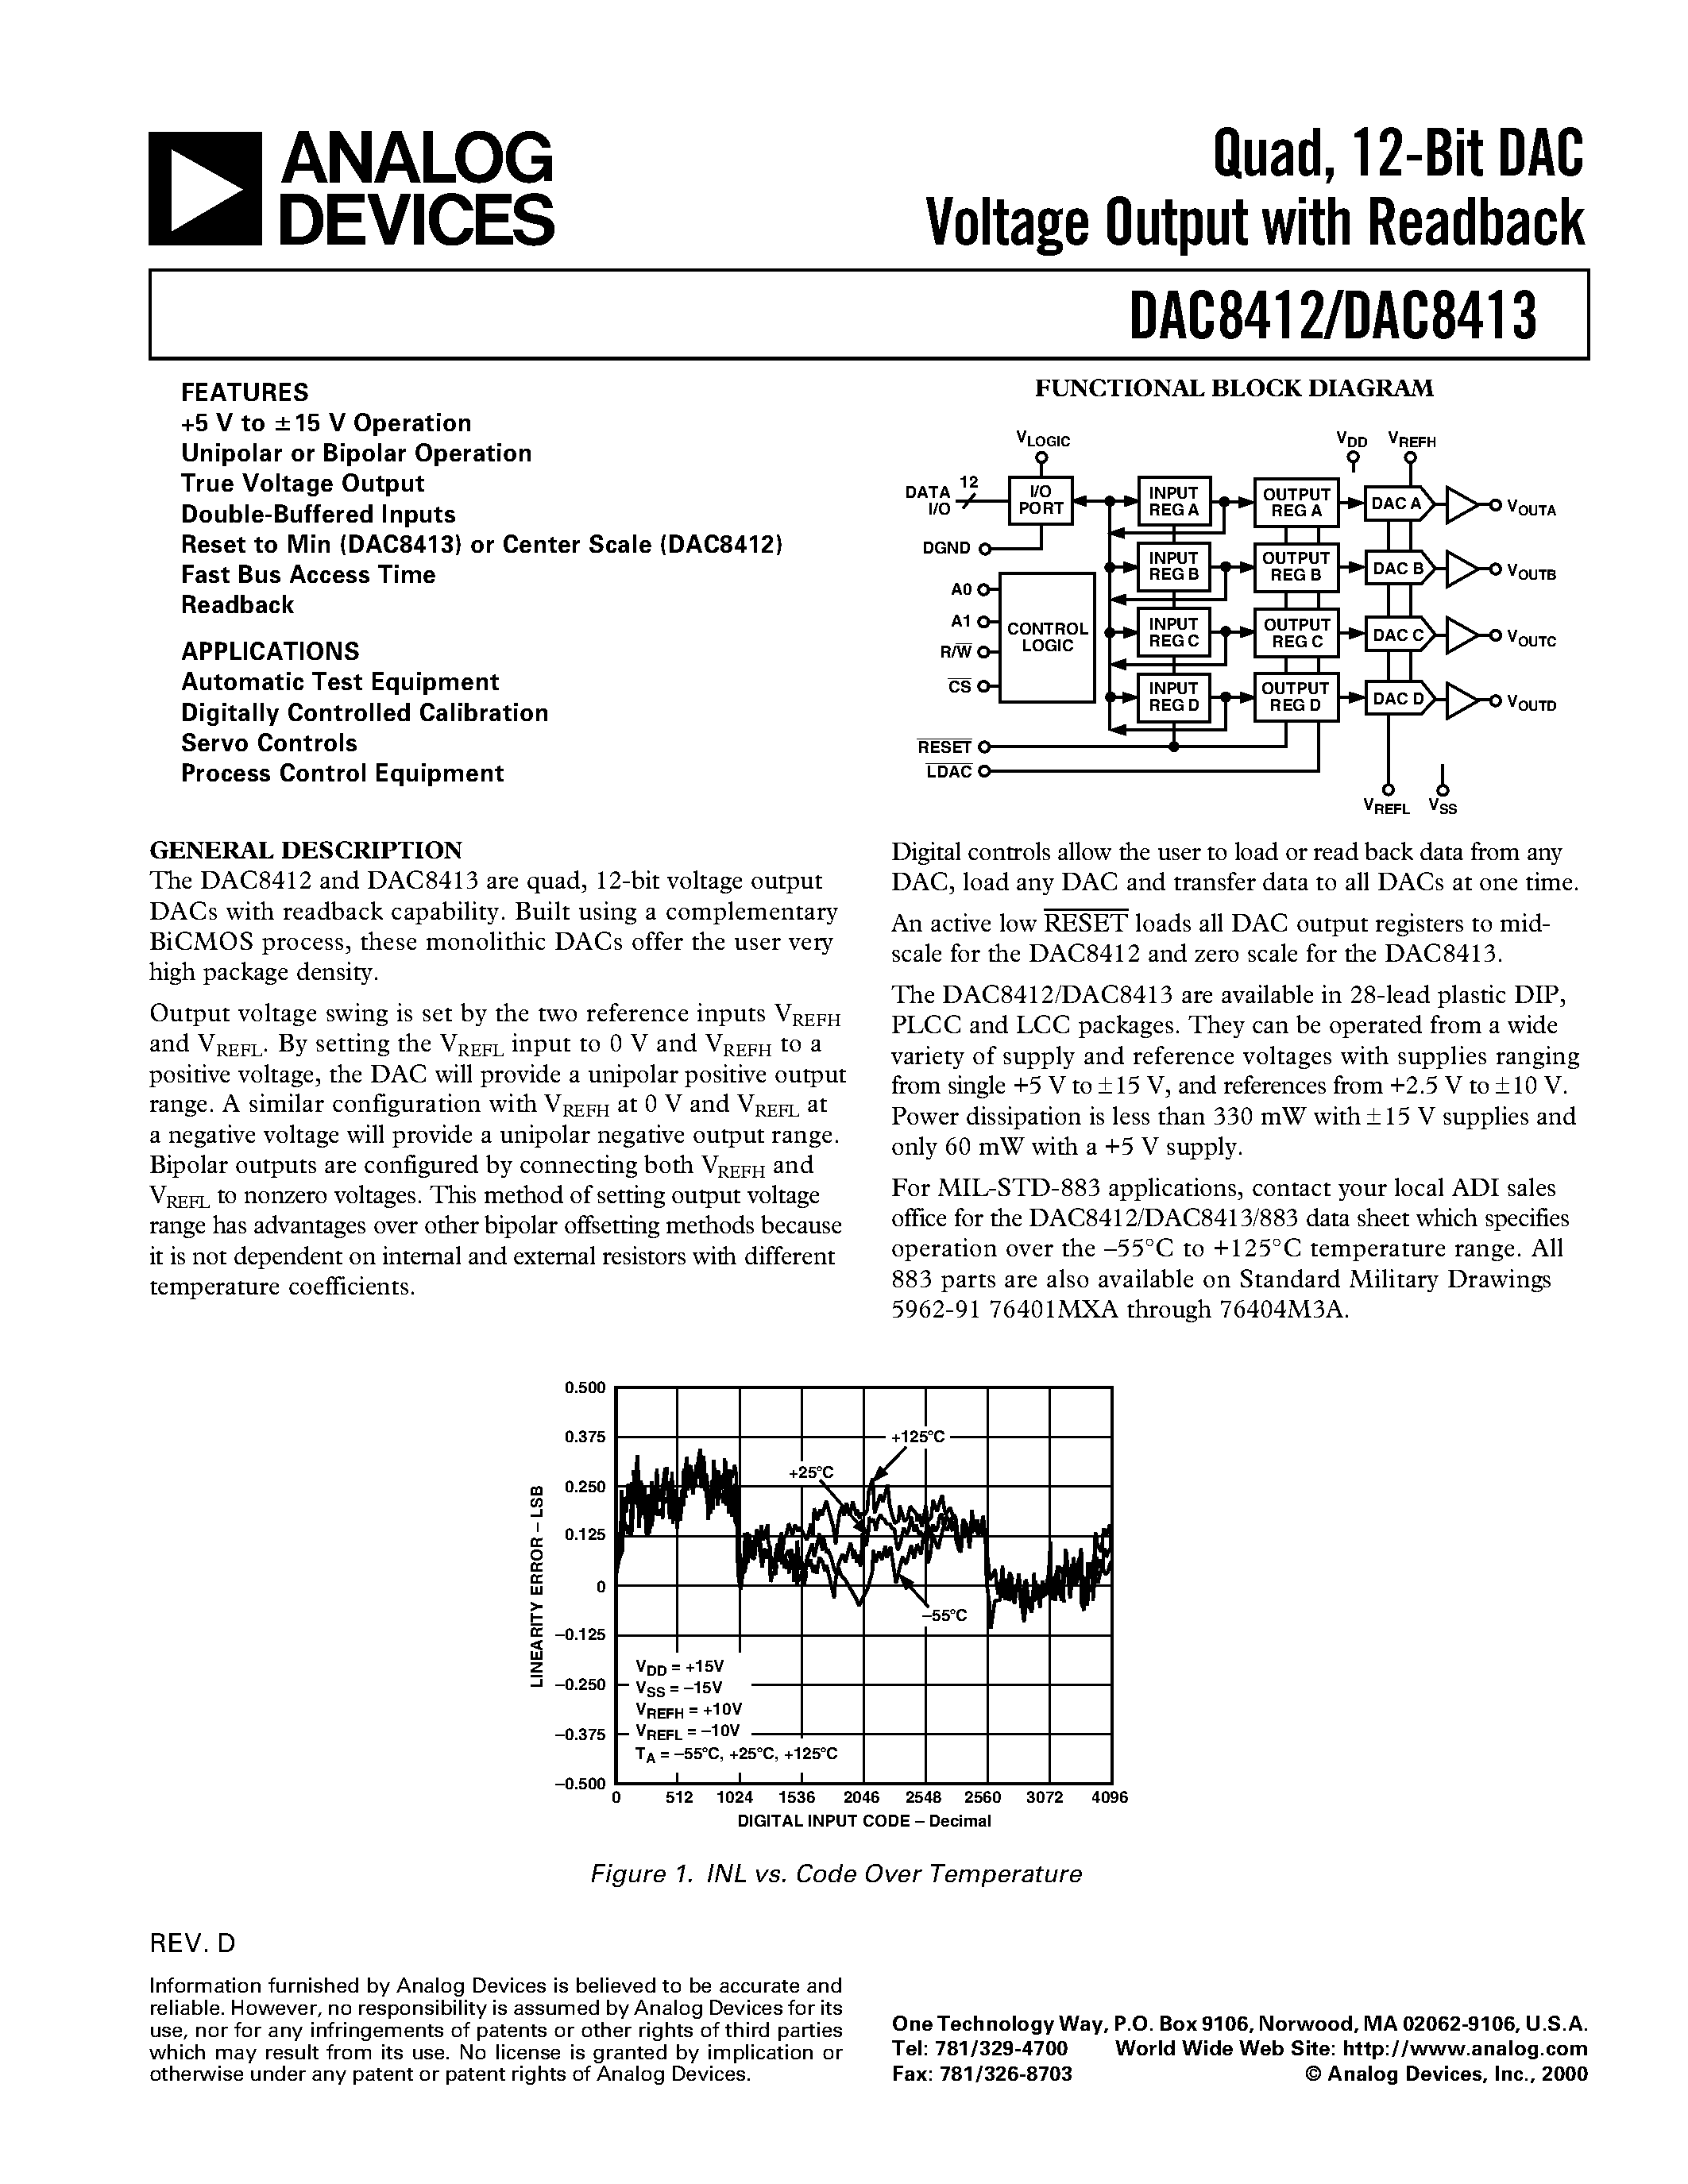 Даташит DAC8412 - Quad/ 12-Bit DAC Voltage Output with Readback страница 1